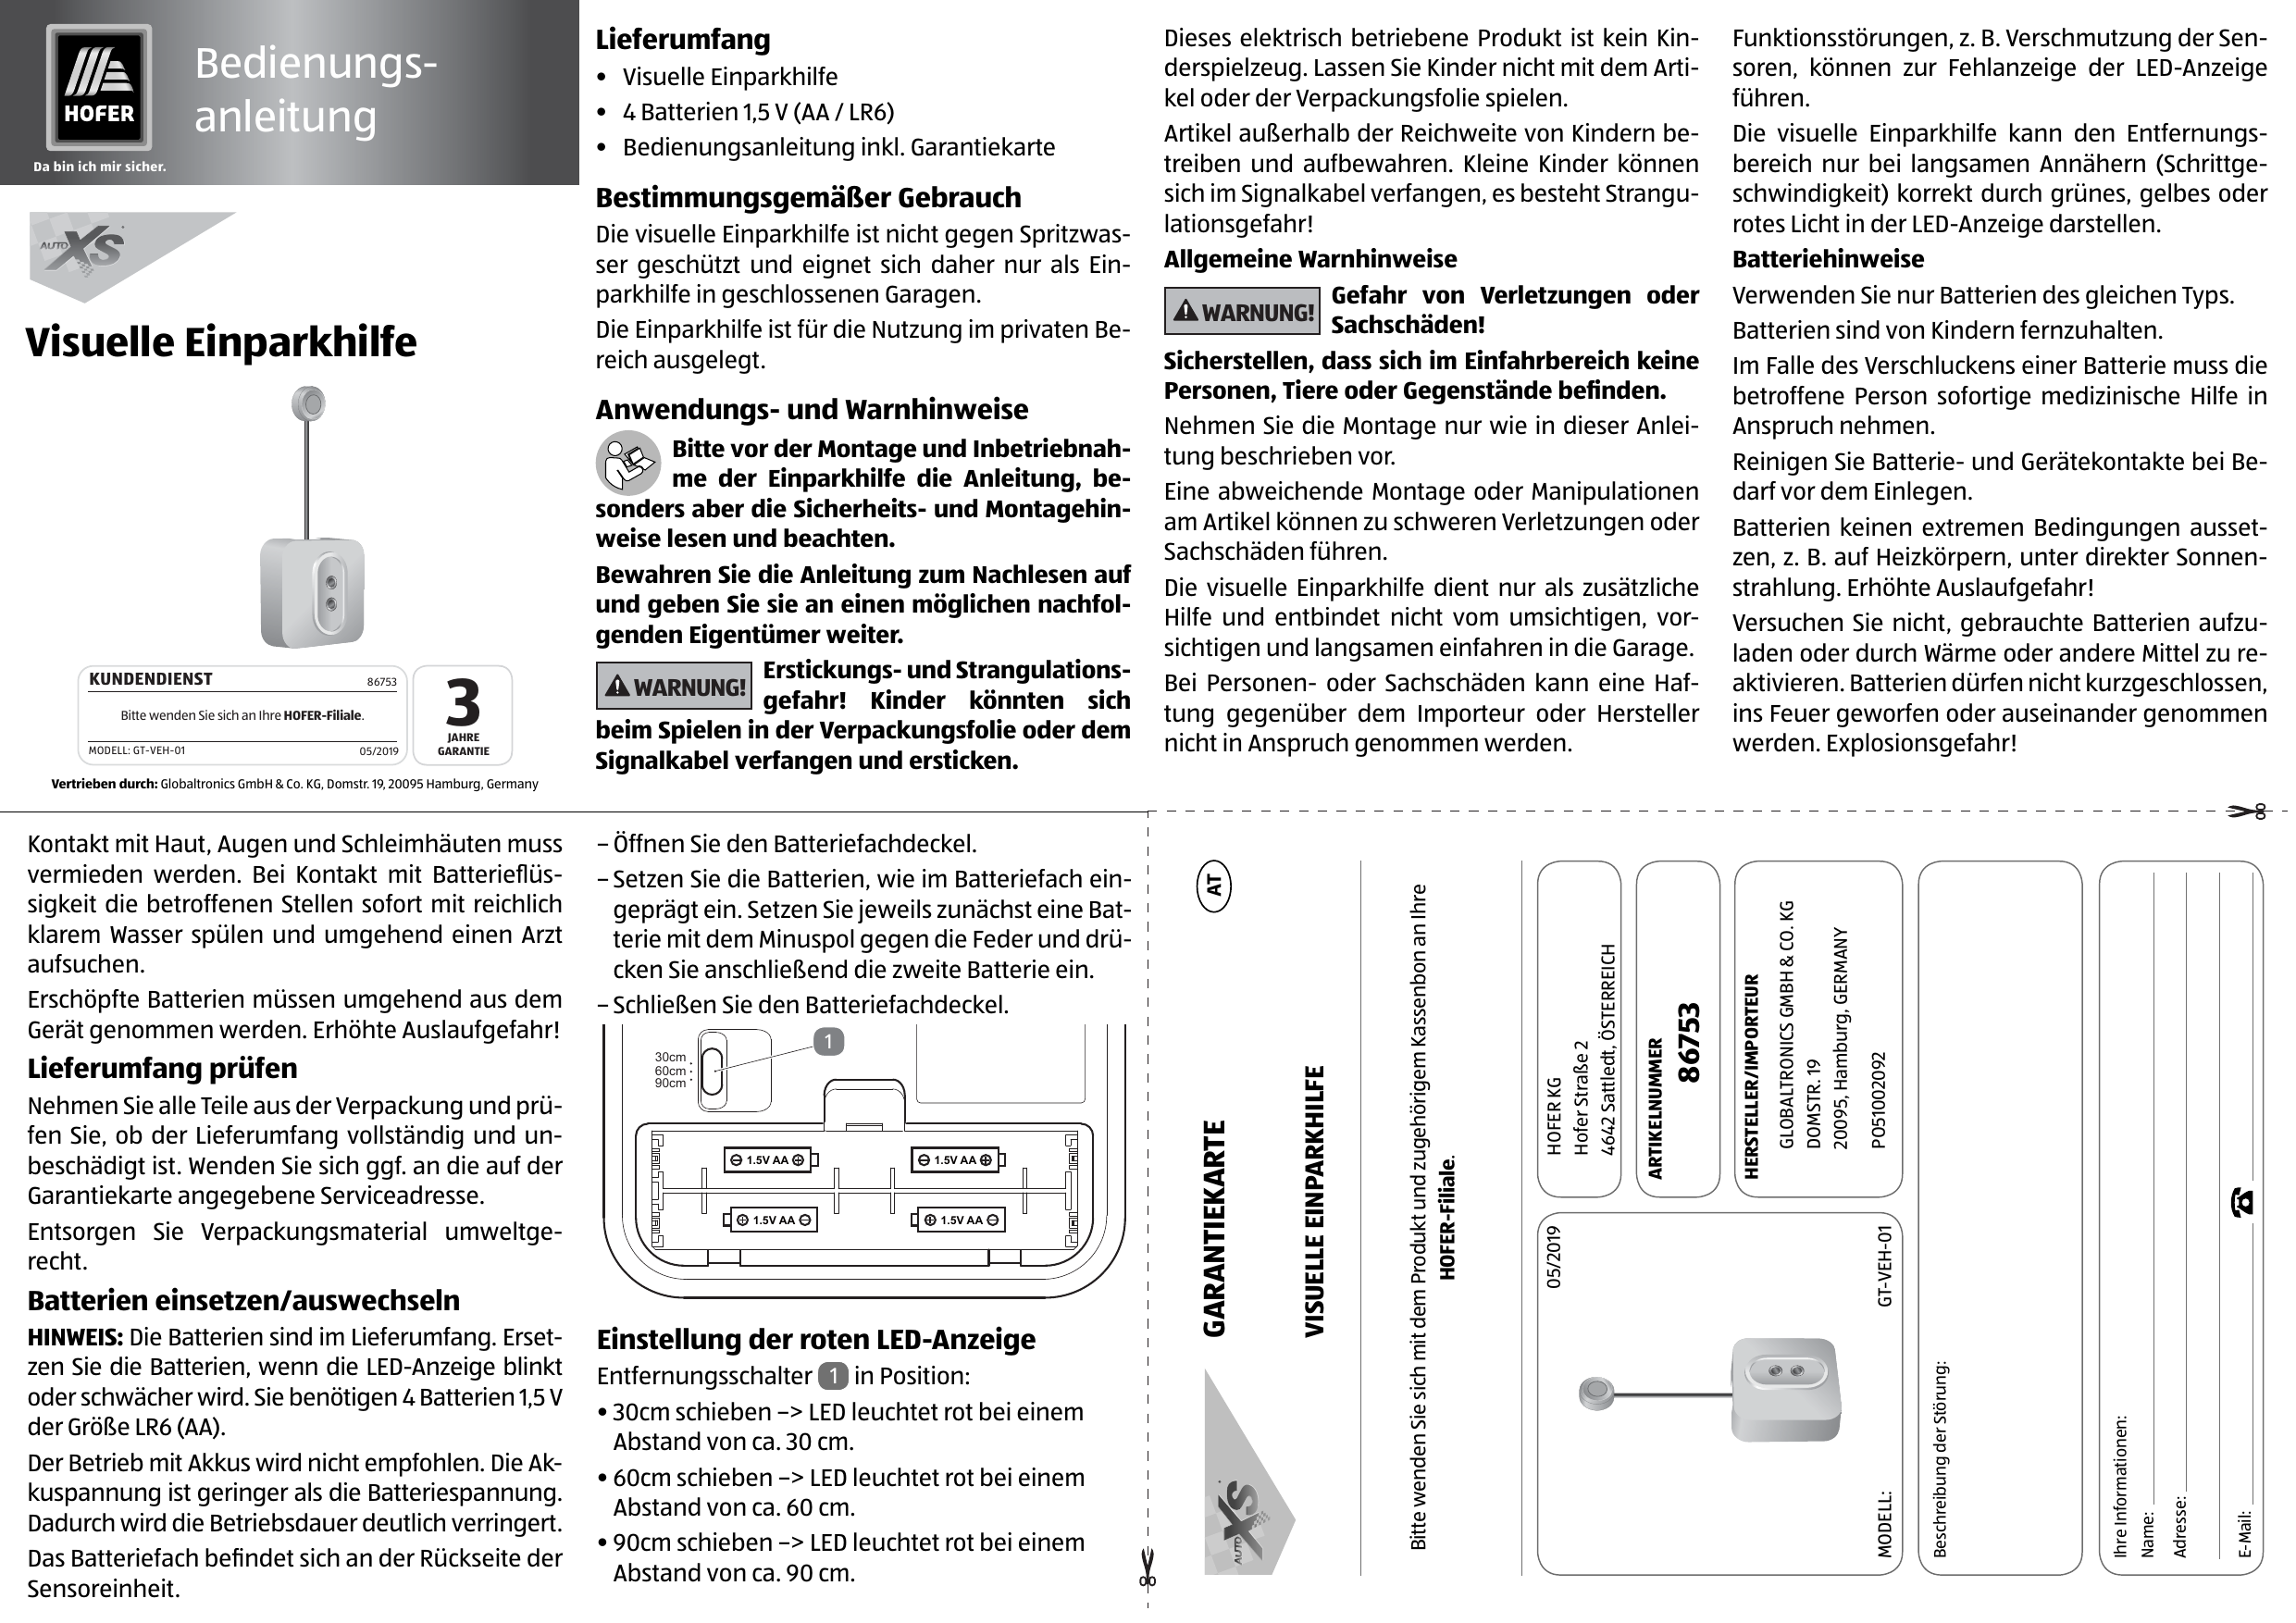 Auto XS GT-VEH-01 Ultrasonic car packing indicator Benutzerhandbuch